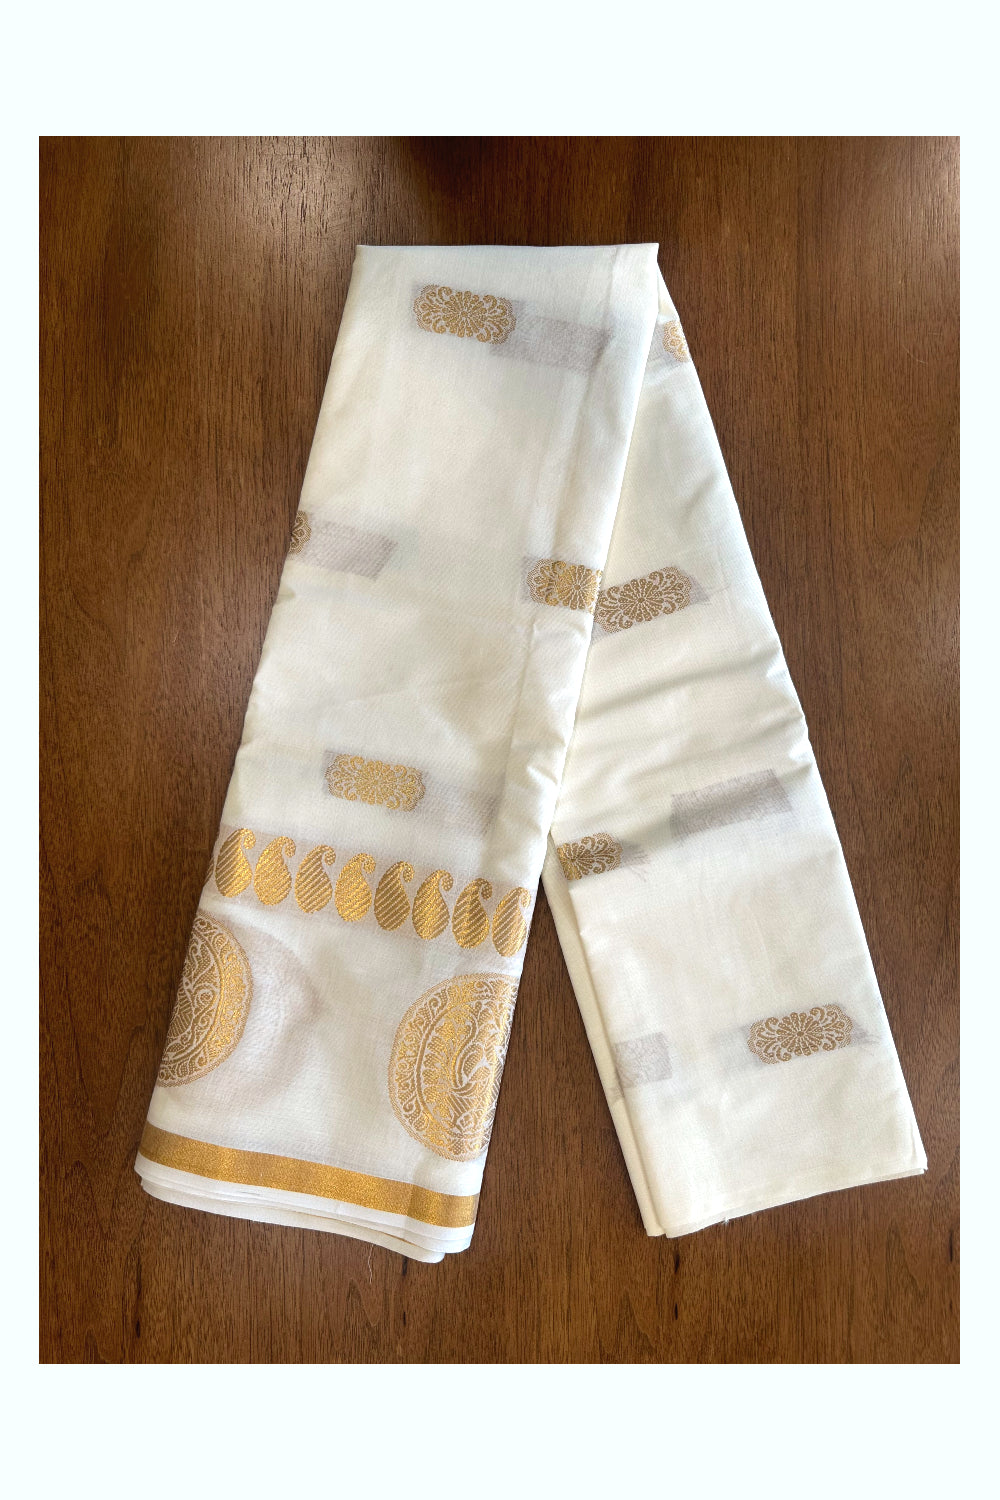 Kerala Cotton Skirt Material with Kasavu Woven Patterns (4 meters)